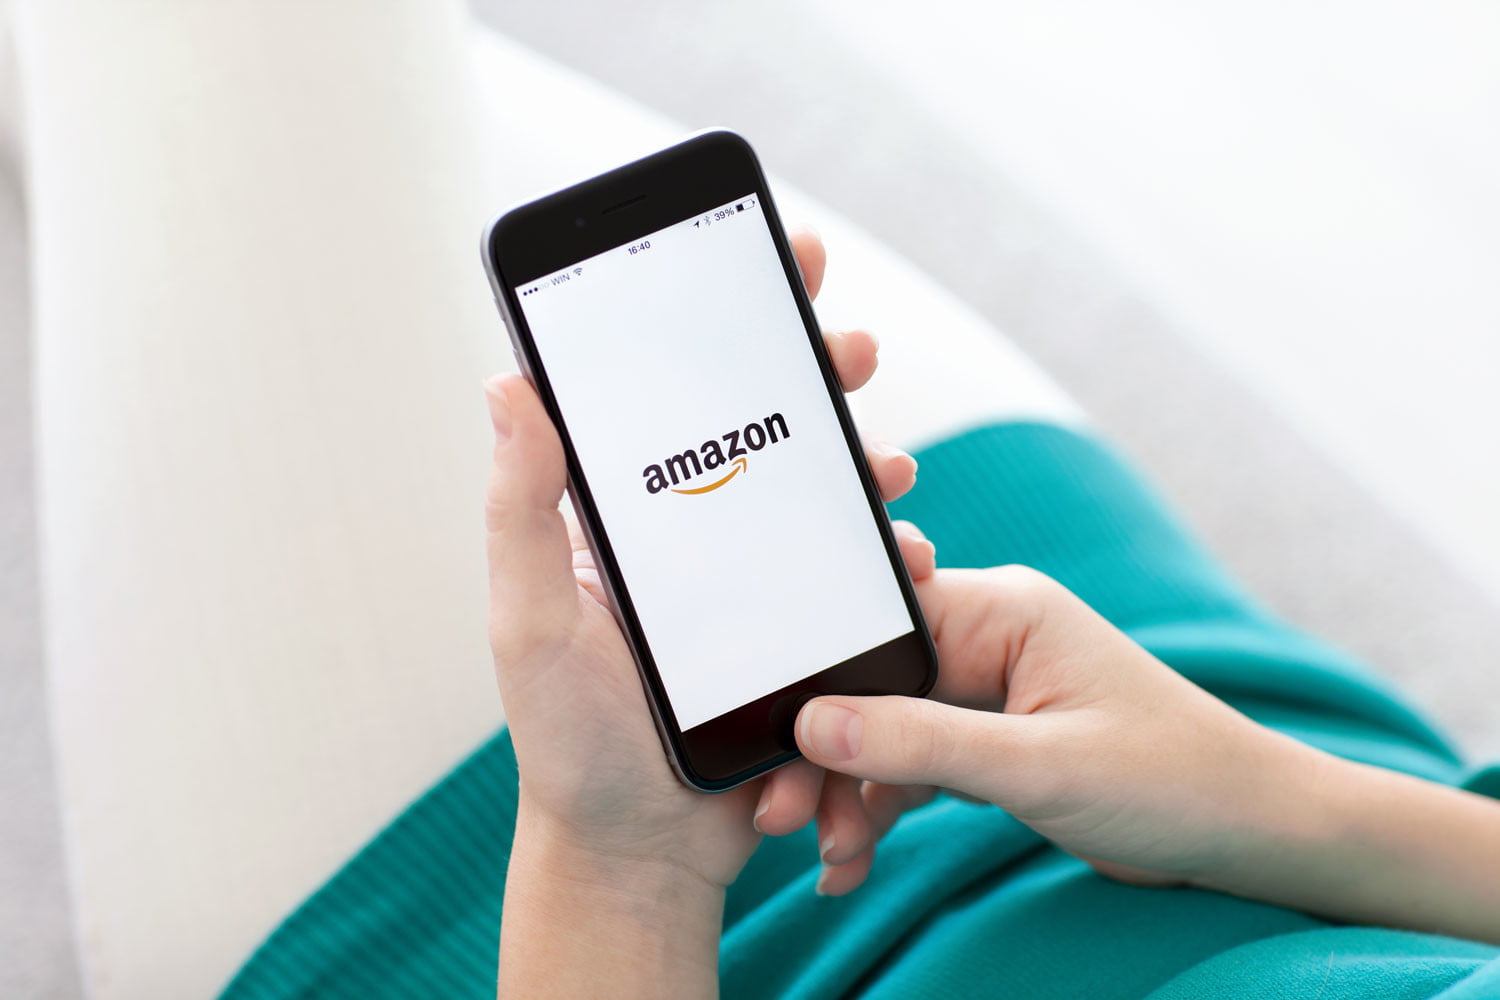 Amazon International Shopping app